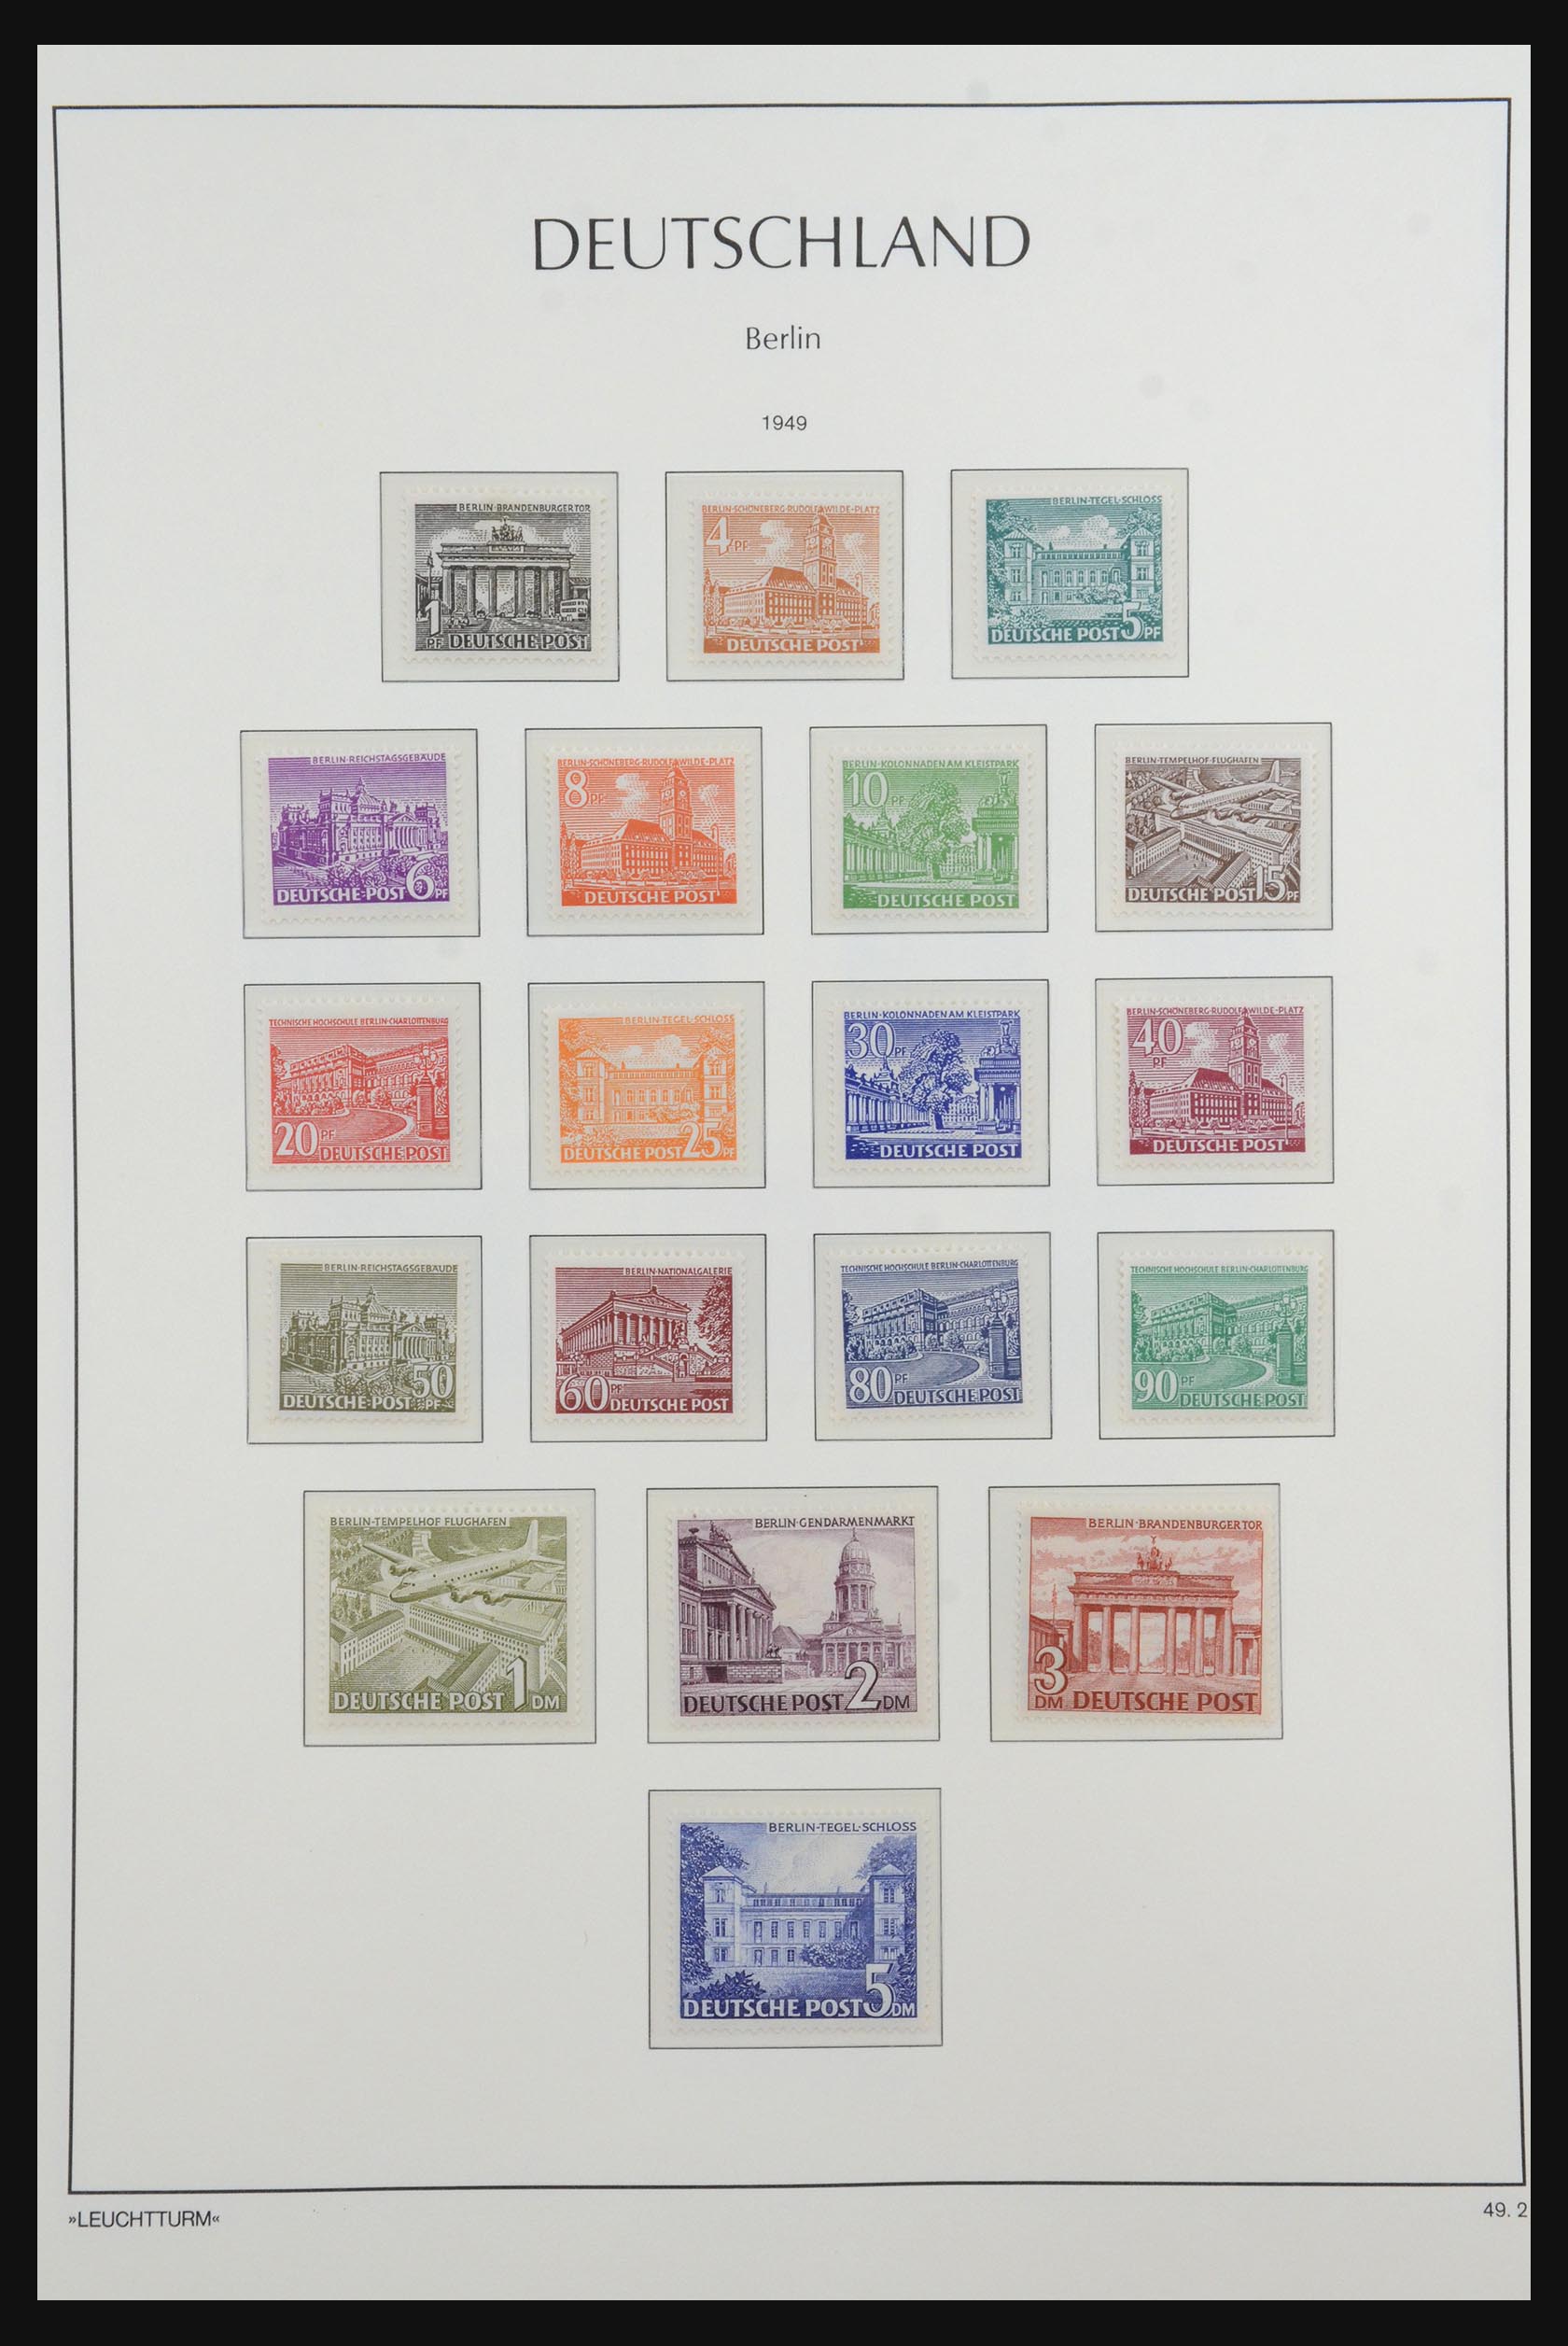 31601 003 - 31601 Bundespost, Berlin and Saar 1948-2008.